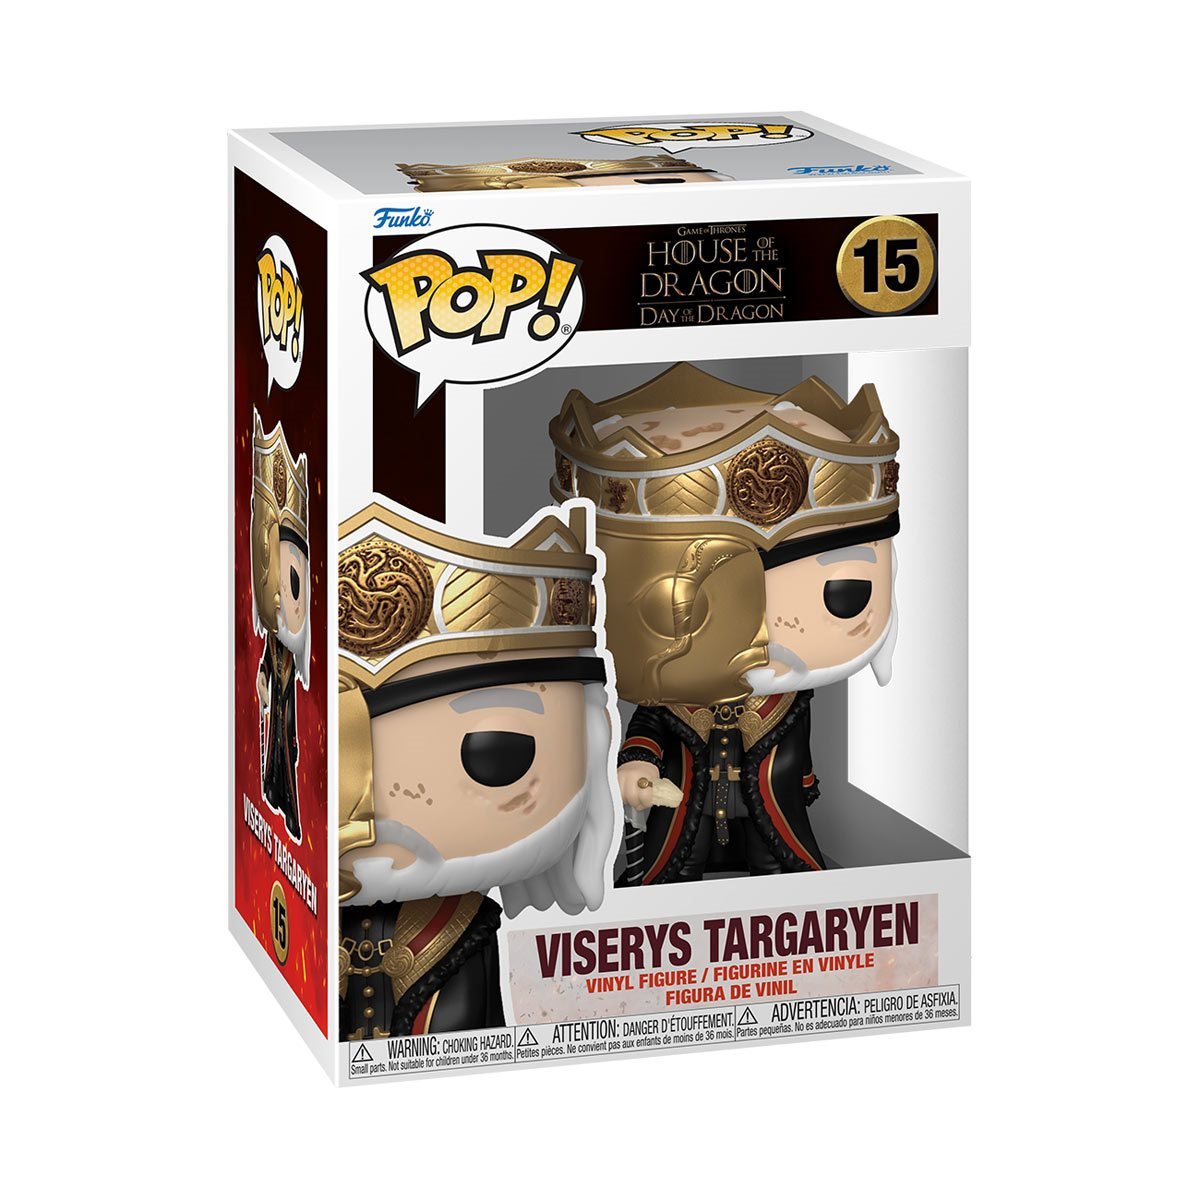 POP! TV HOTD Viserys Targaryen #15